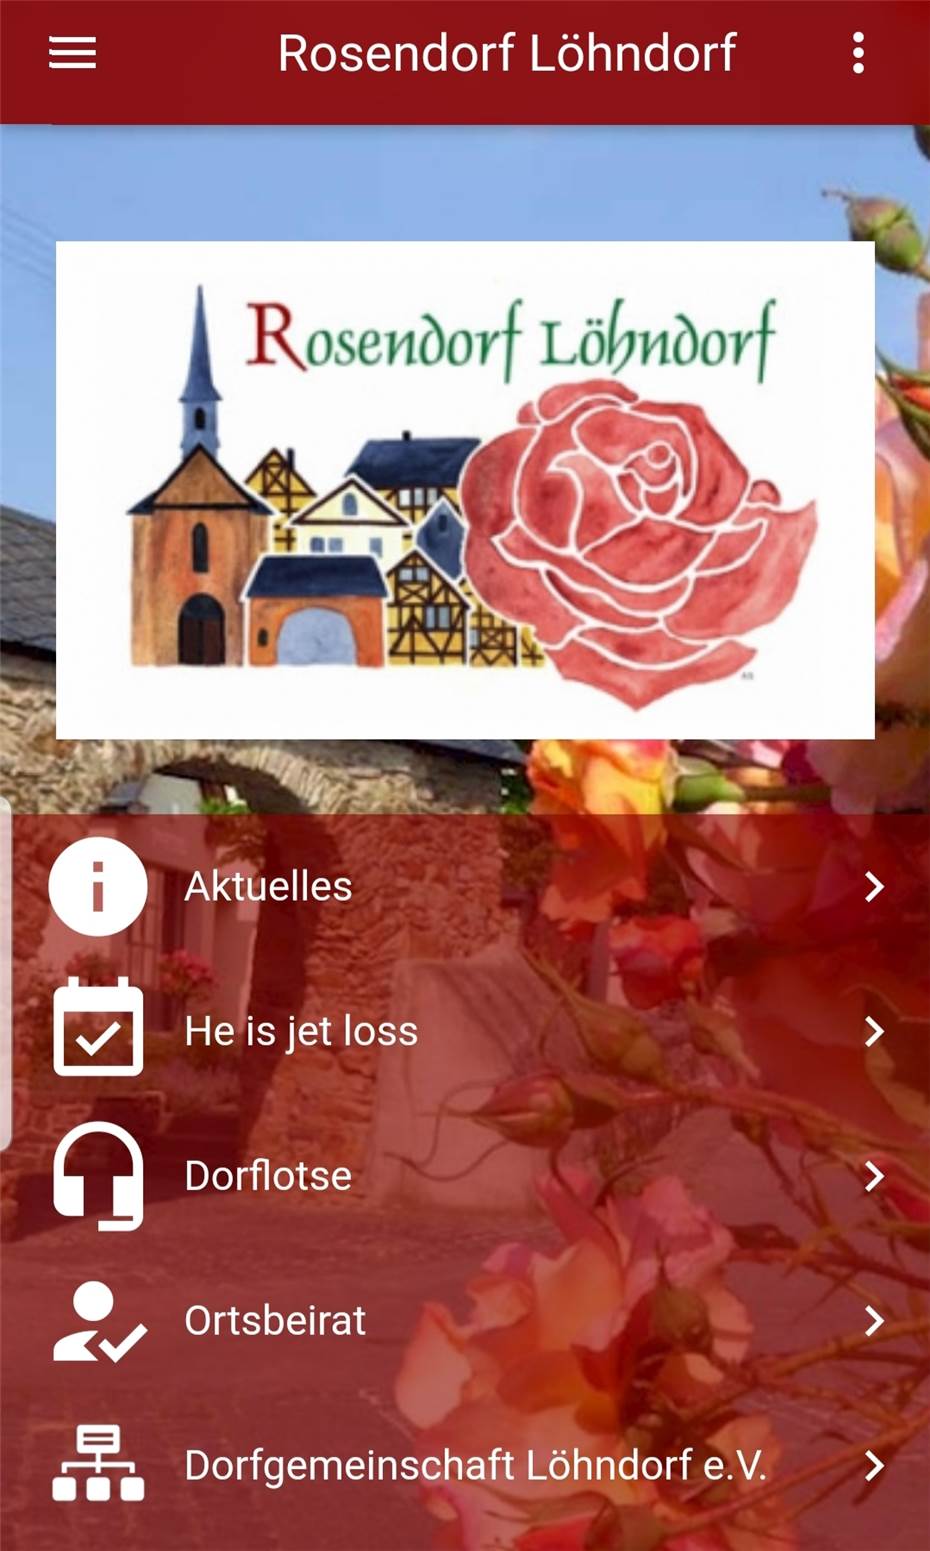 Löhndorf en de Täsch:
Die Löhndorf-App